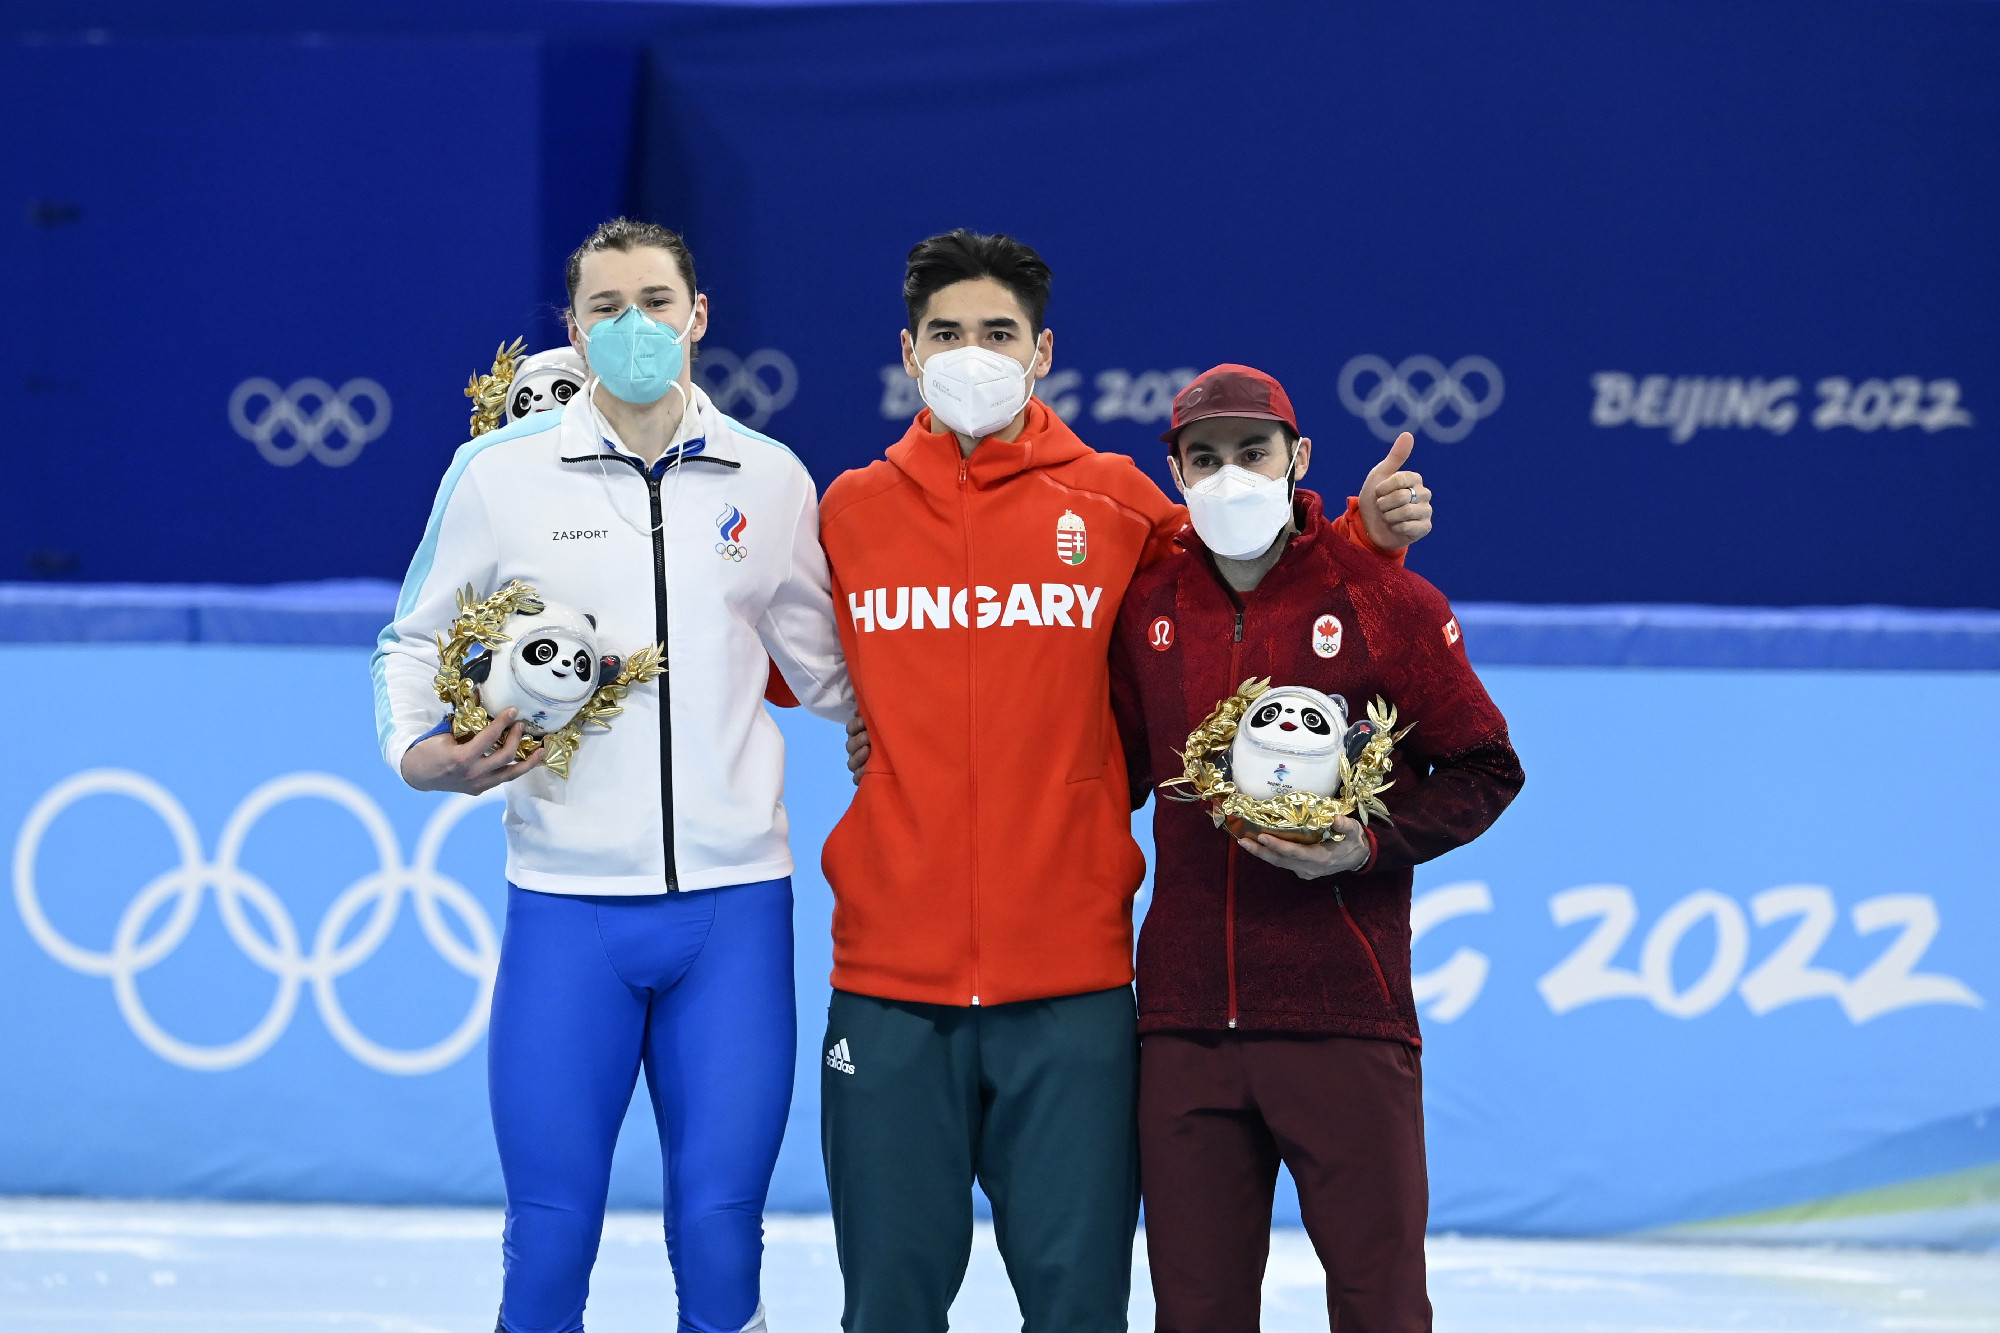 Nagyot futott és aranyérmes lett Liu Shaoang 500 méteren